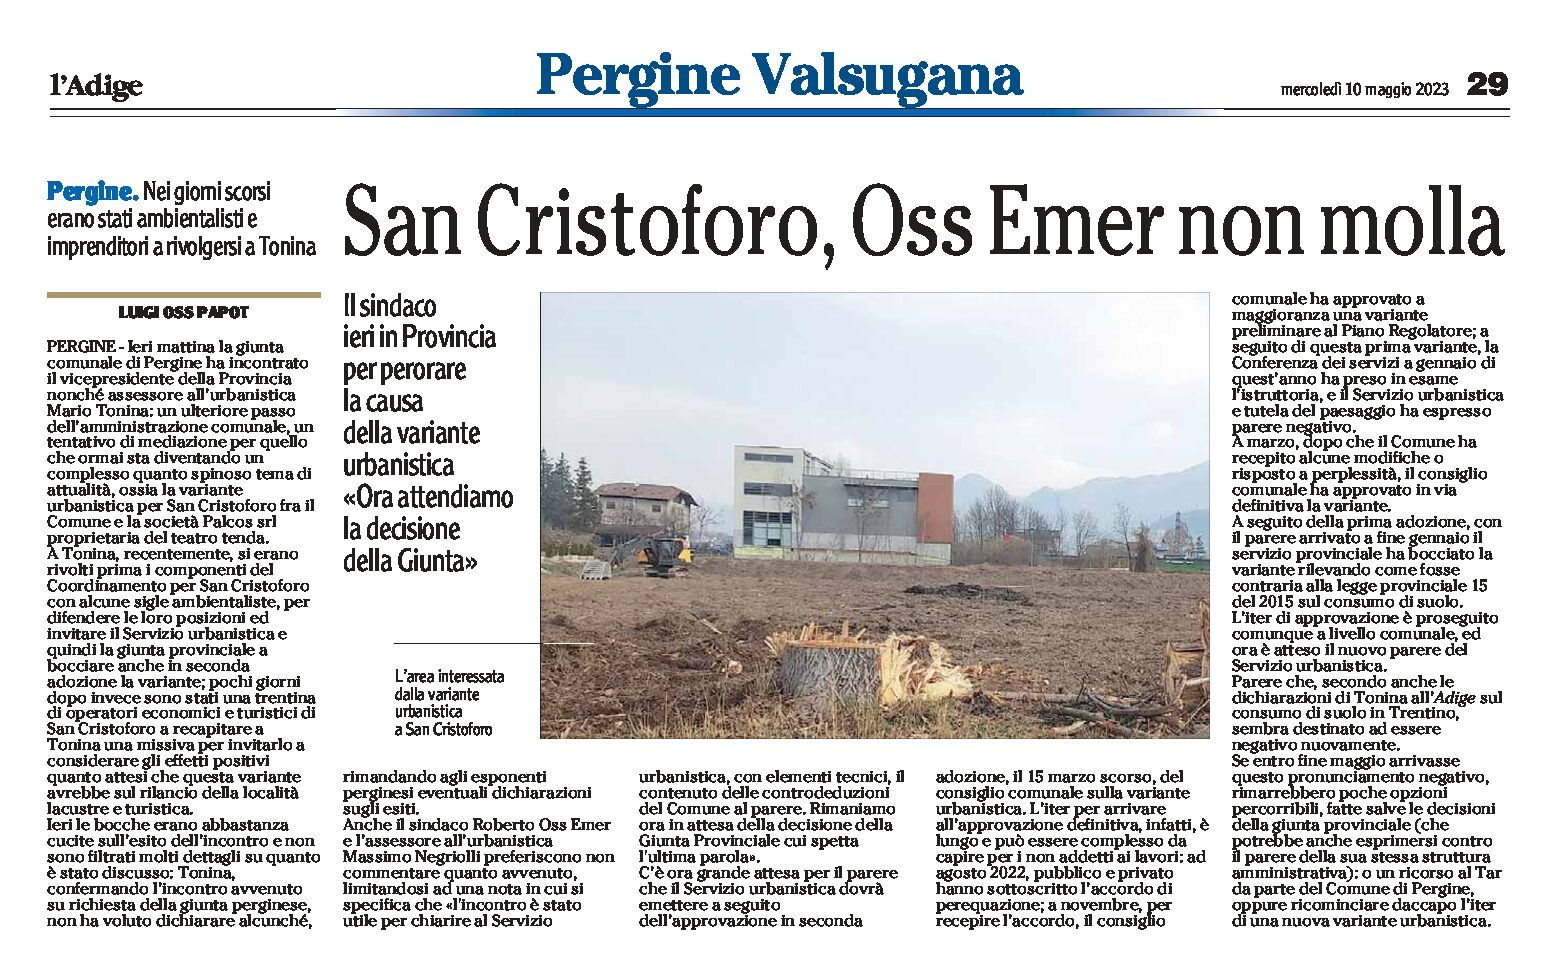 Pergine, San Cristoforo: il sindaco Oss Emer non molla